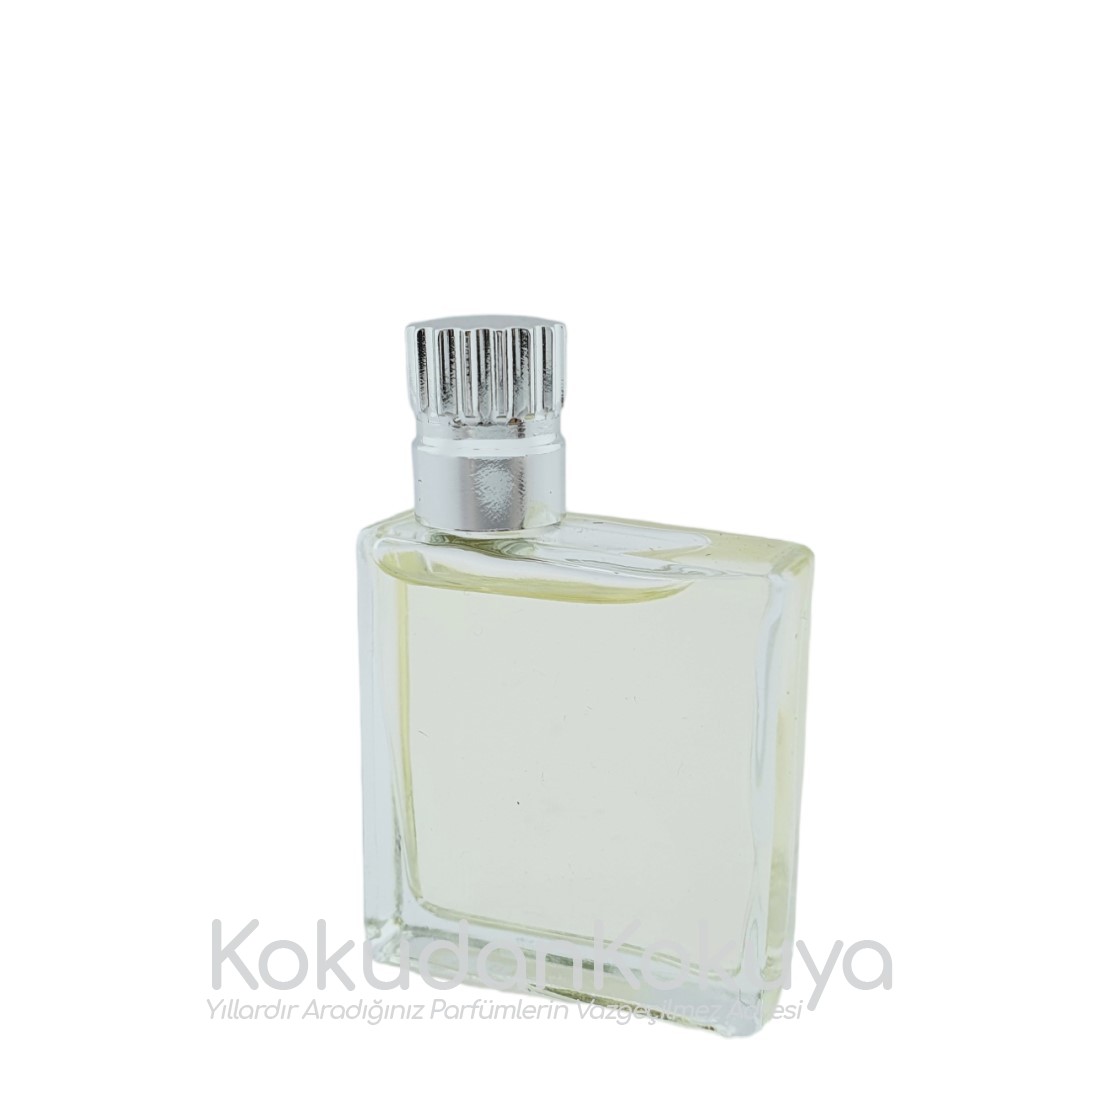 TOMMY HILFIGER Hilfiger Athletics (Vintage) Parfüm Erkek 5ml Minyatür (Mini Perfume) Dökme 